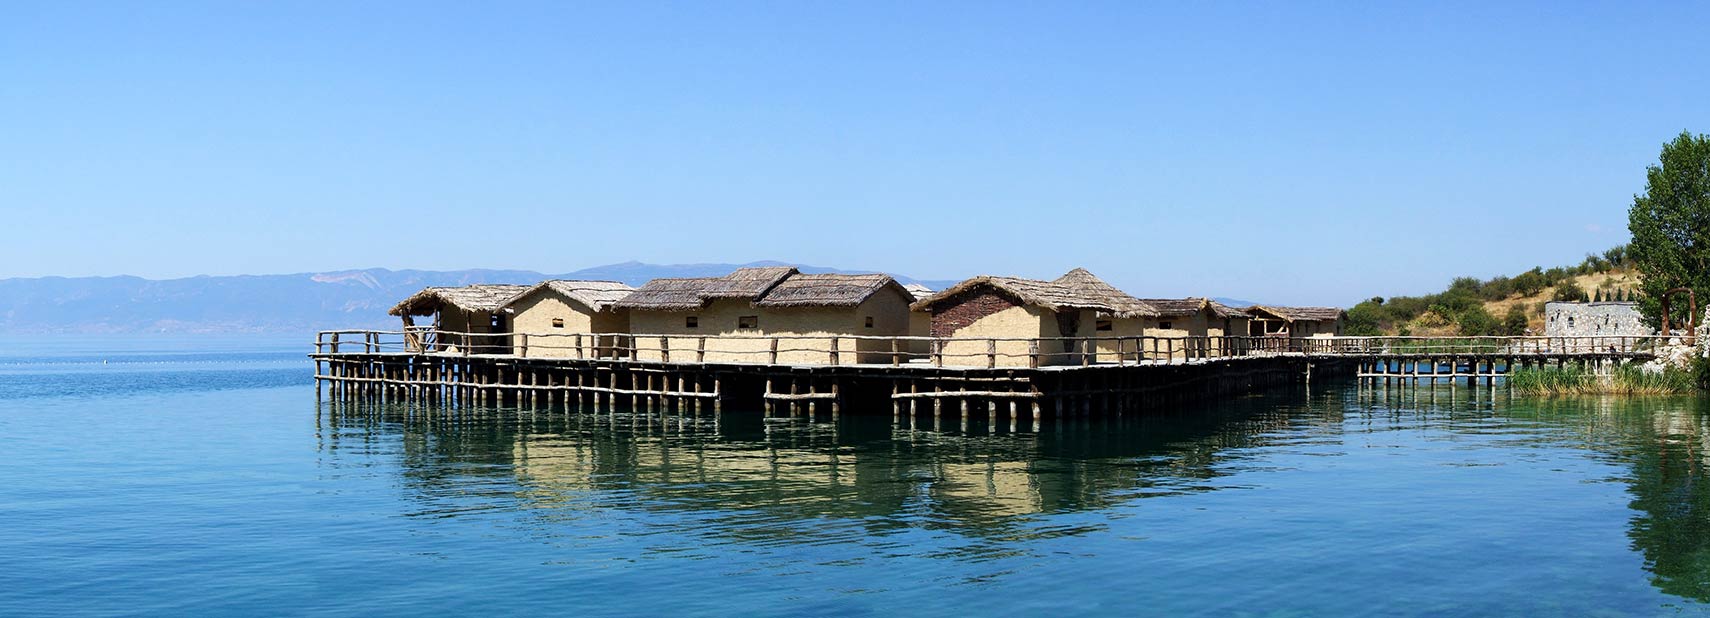 Bronze Age stilt houses on Lake Ohrid